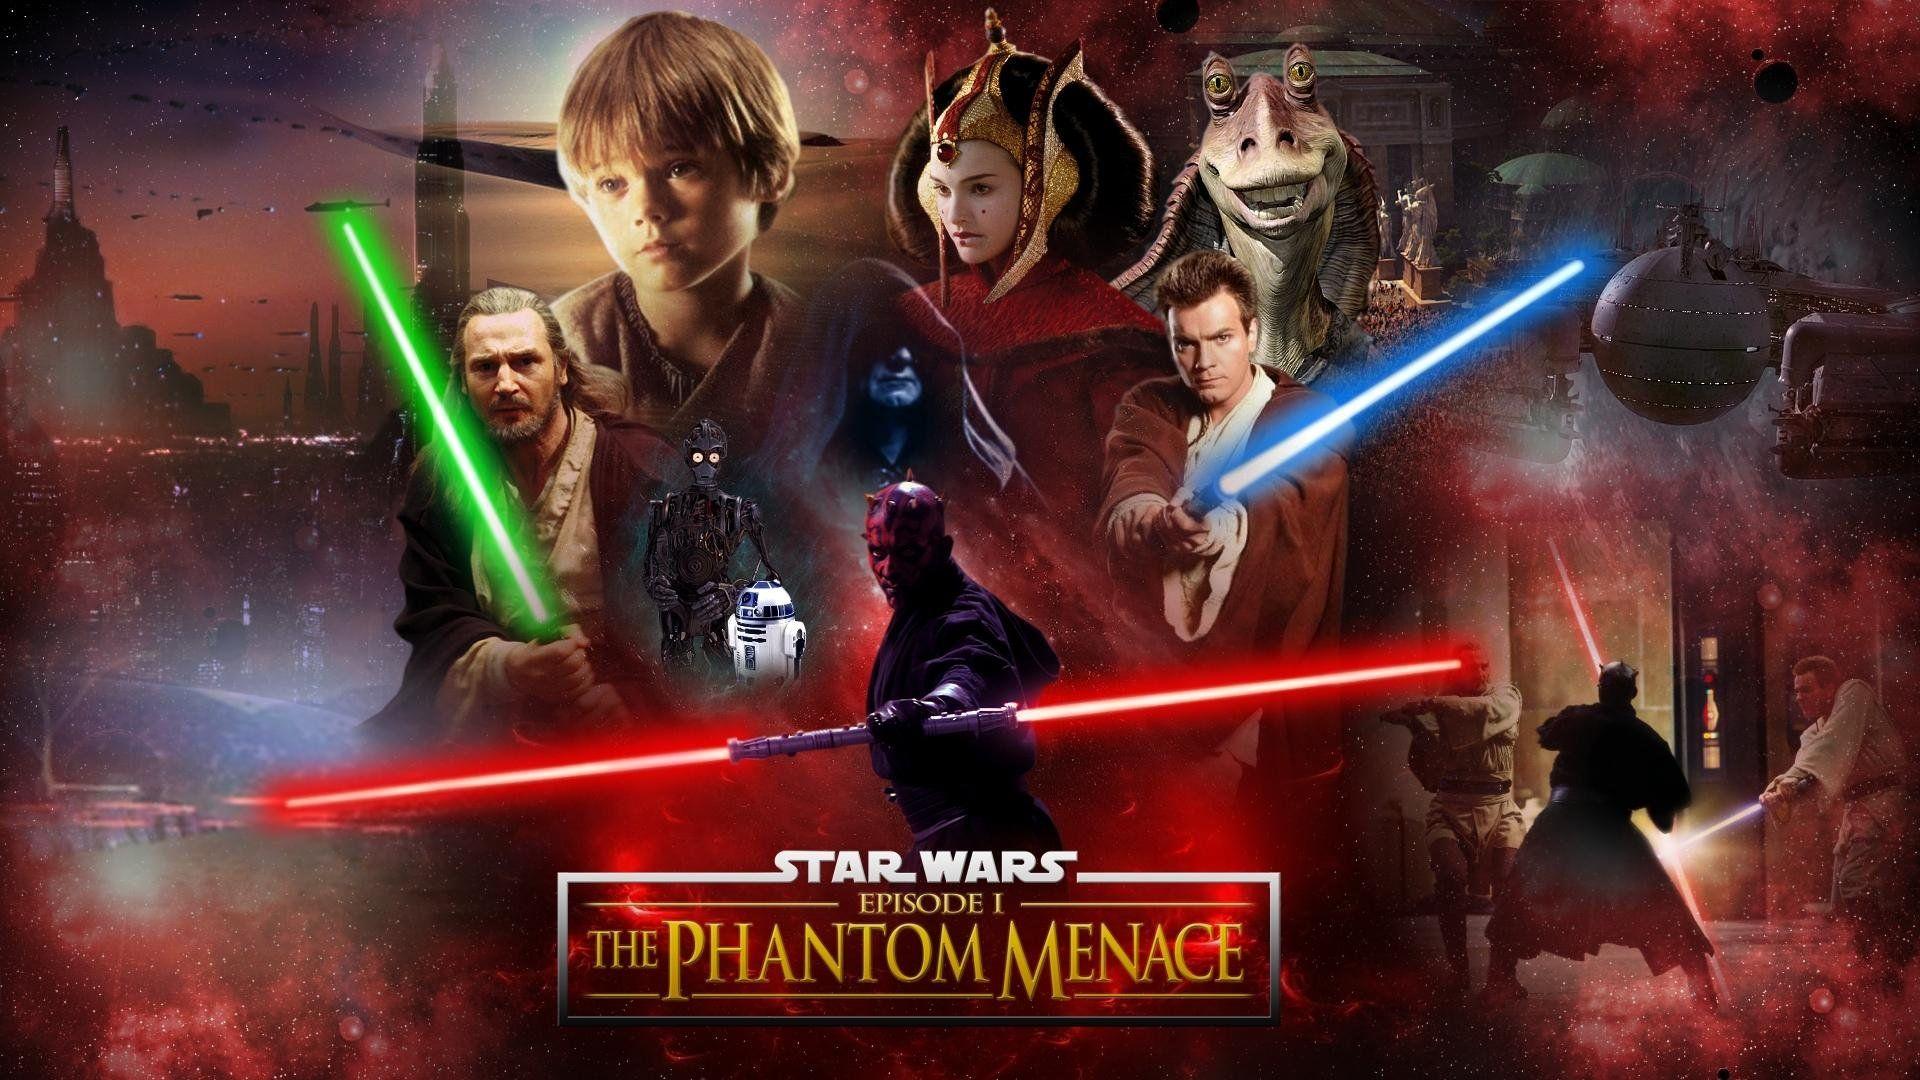 Star Wars Ep. I: The Phantom Menace download the last version for windows